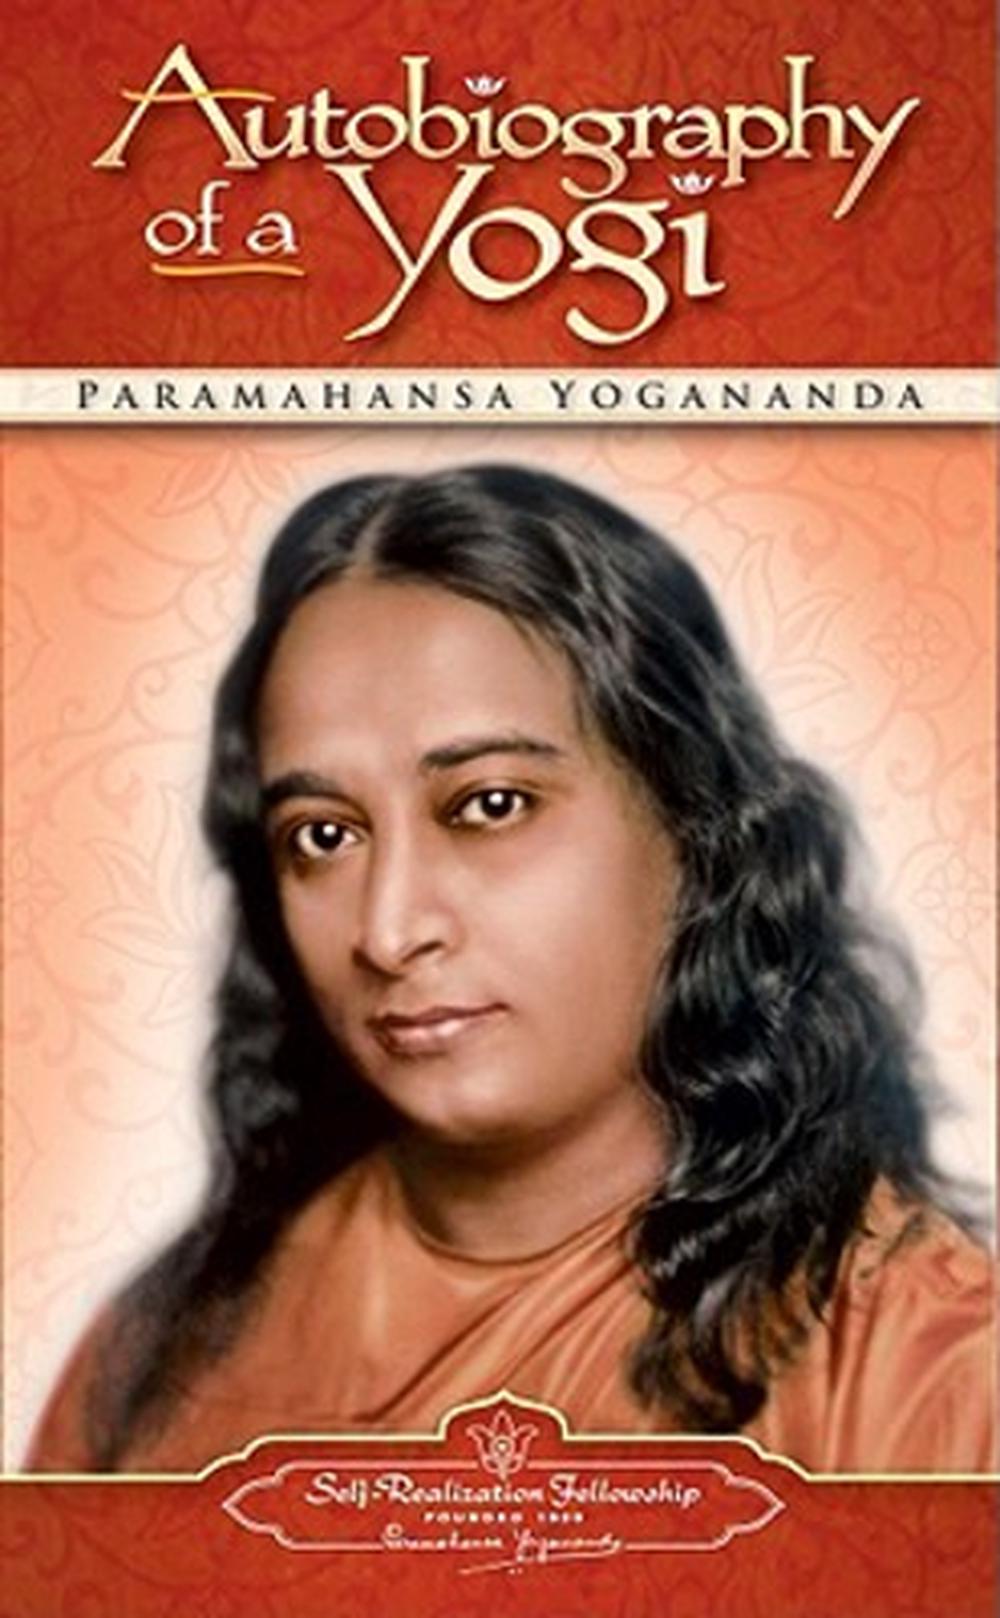 the autobiography of yogi pdf